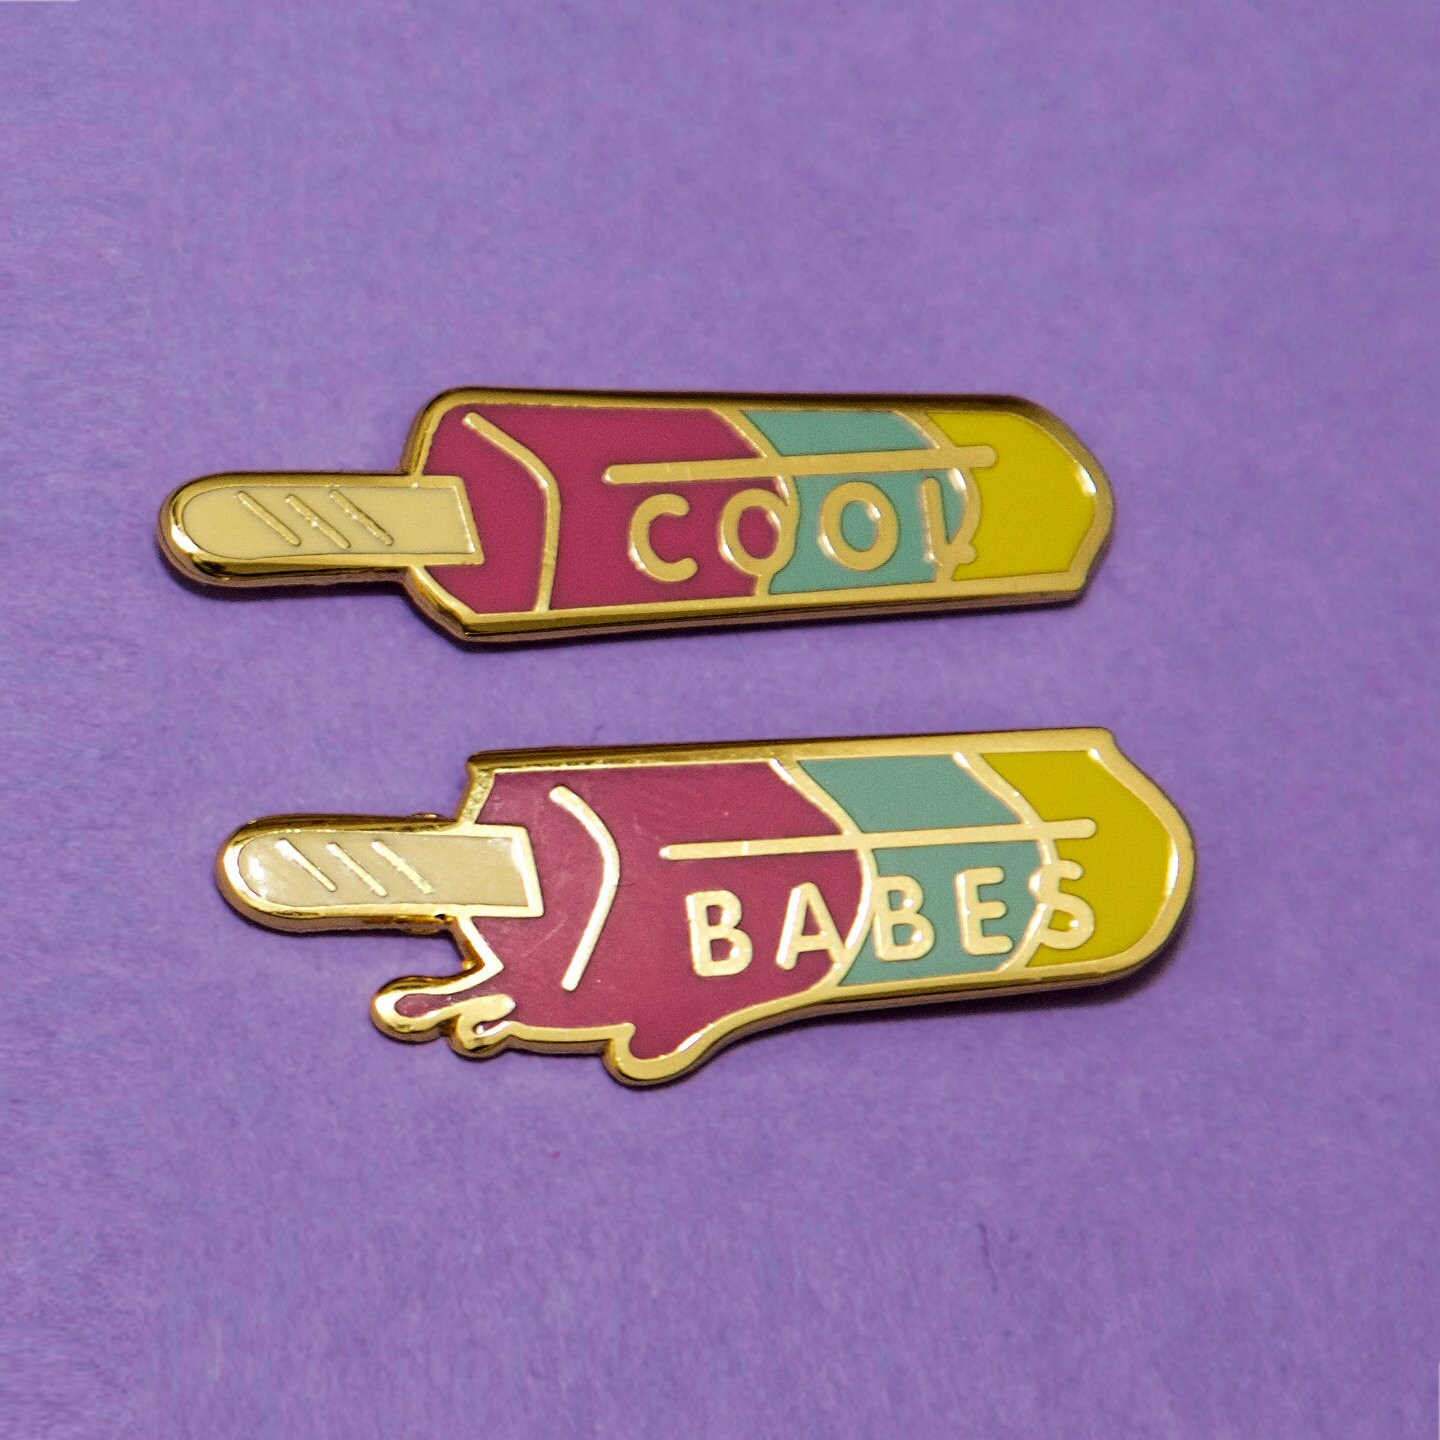 Cool Babes Hard enamel lapel pin set by KateandCait on Etsy